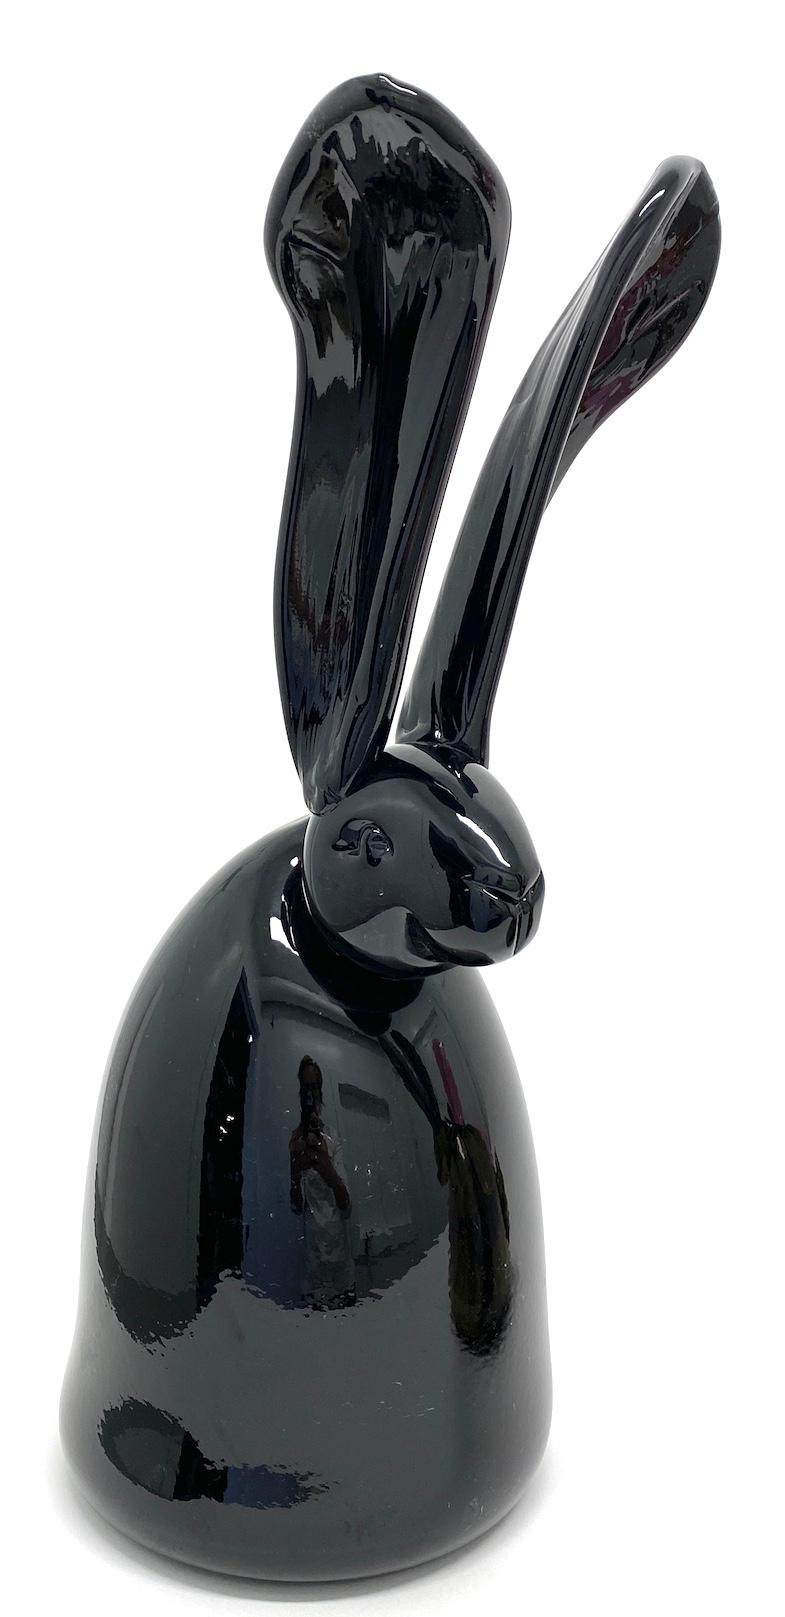 Black glass bunny - Sculpture by Hunt Slonem